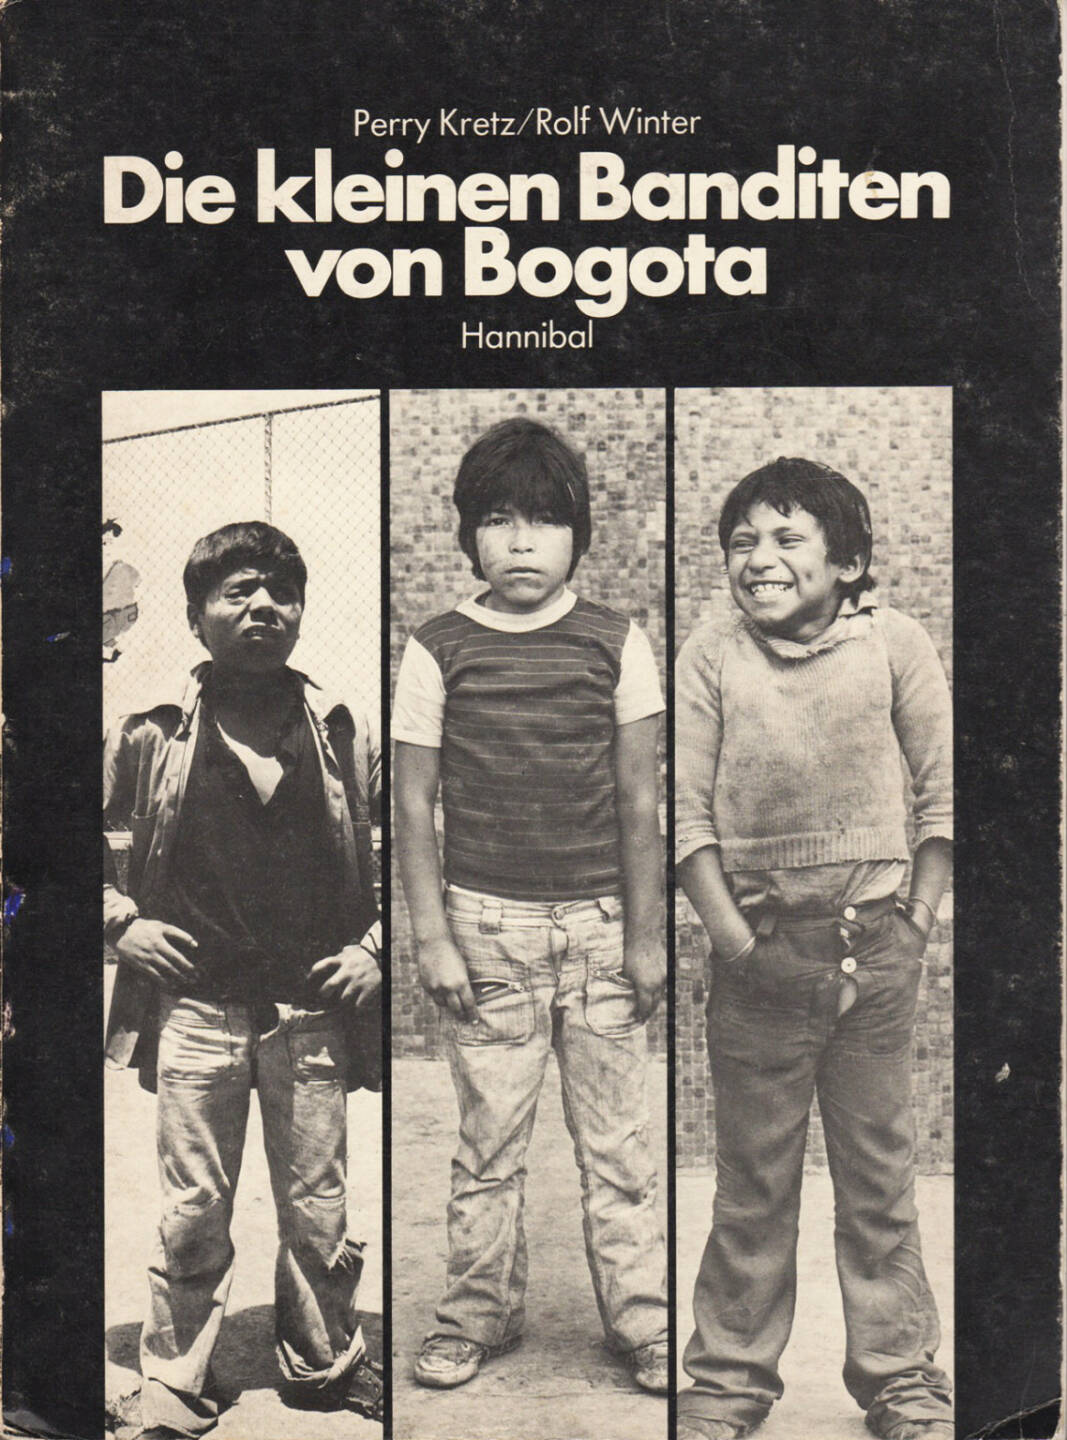 Perry Kretz / Rolf Winter - Die kleinen Banditen von Bogota, hannibal 1978, Cover - http://josefchladek.com/book/perry_kretz_rolf_winter_-_die_kleinen_banditen_von_bogota